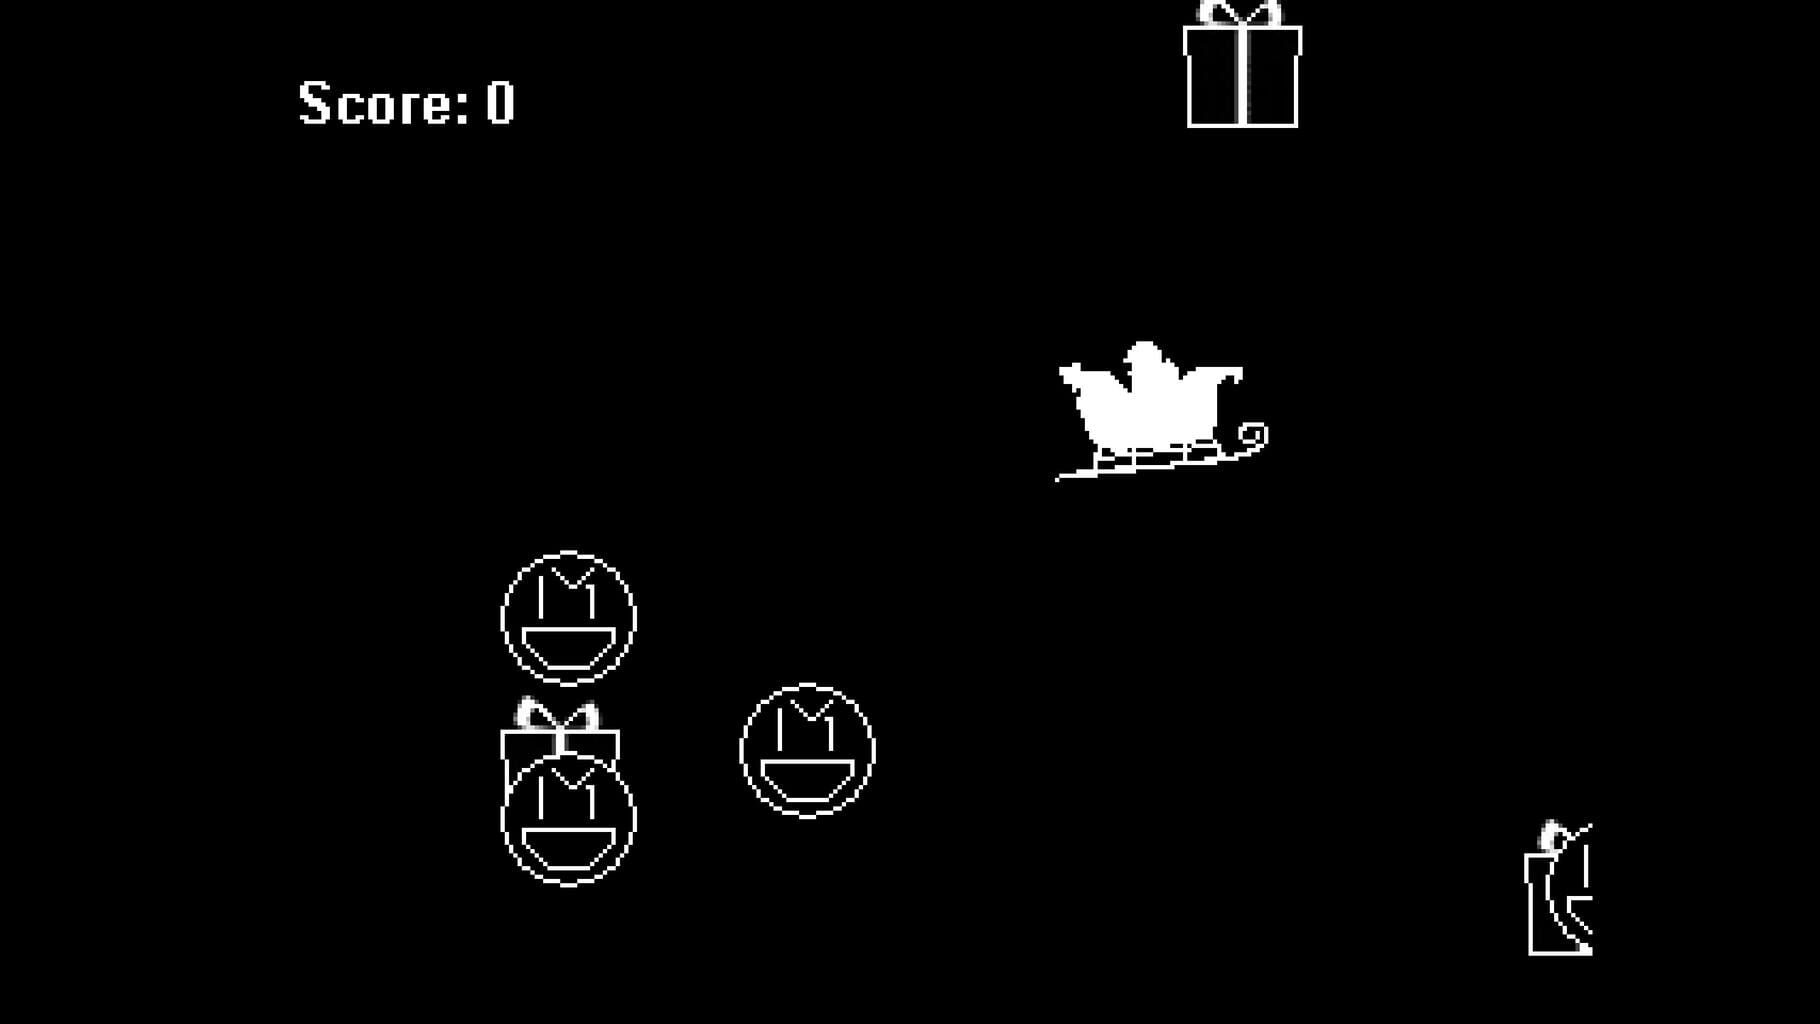 Santa Claus: Breakthrough Gaming Arcade Image